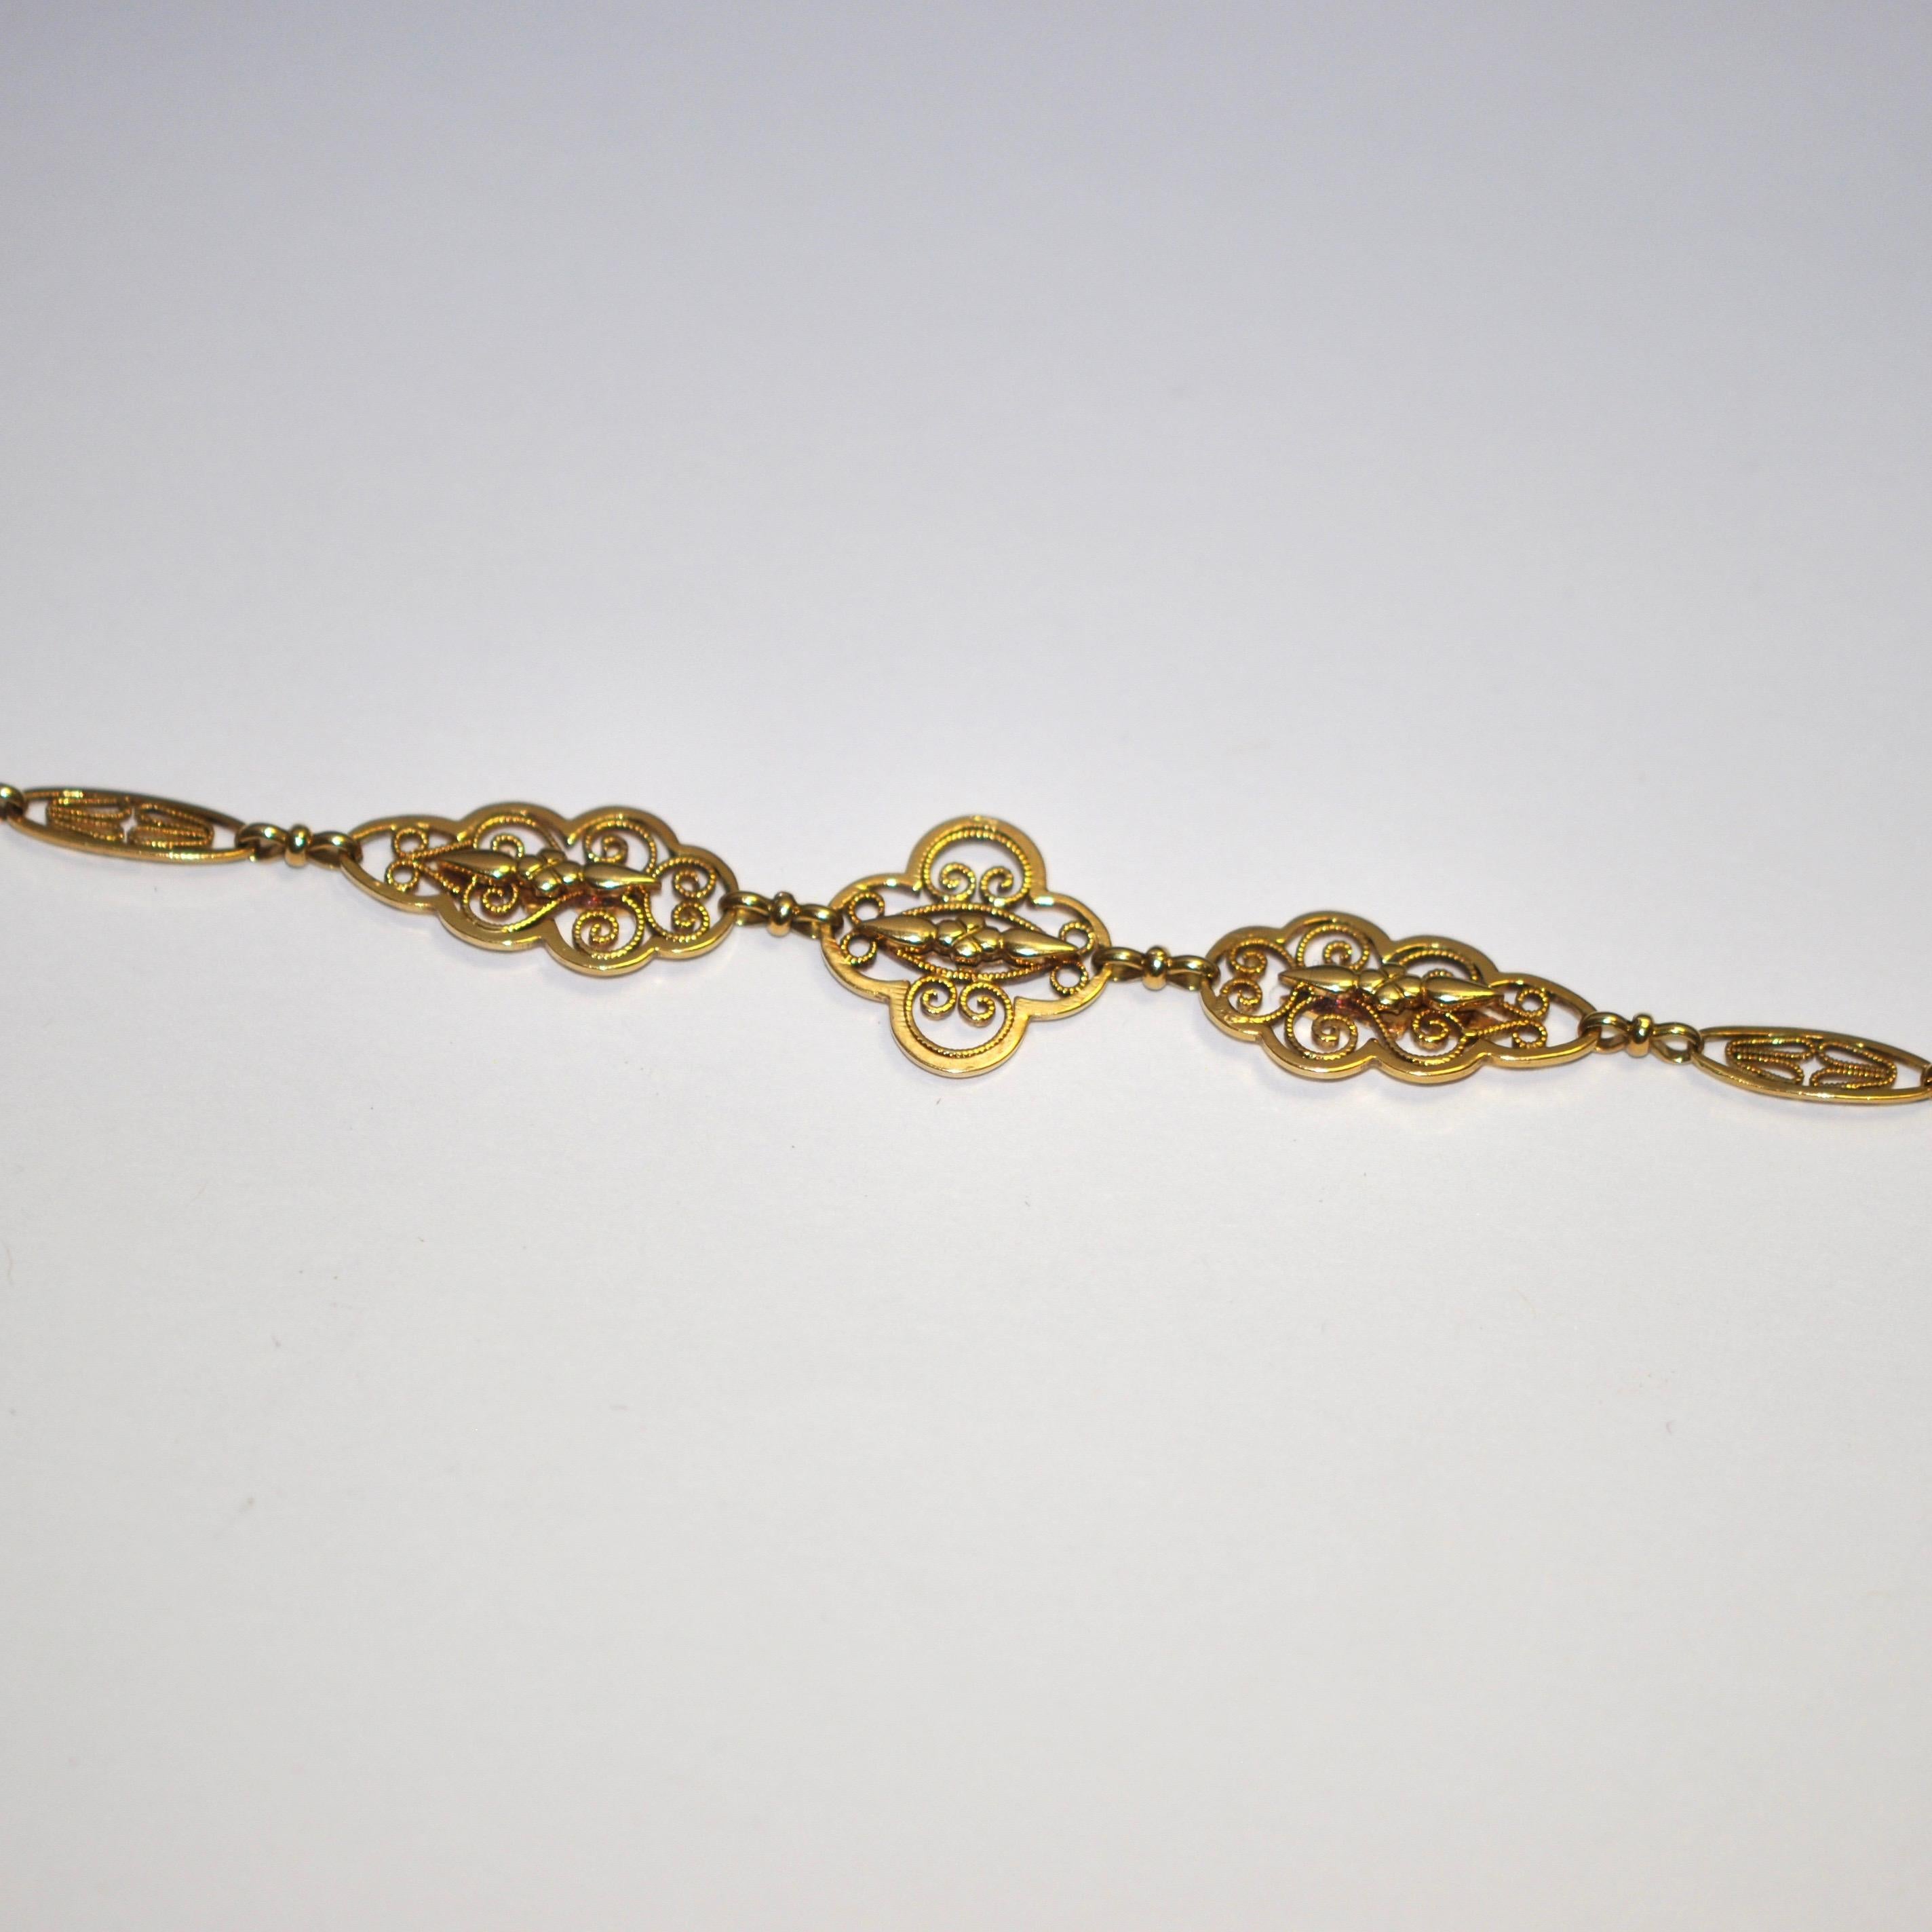 Discover this Yellow Gold 18 Karat Necklace.
Yellow Gold 18 Karat
XXs